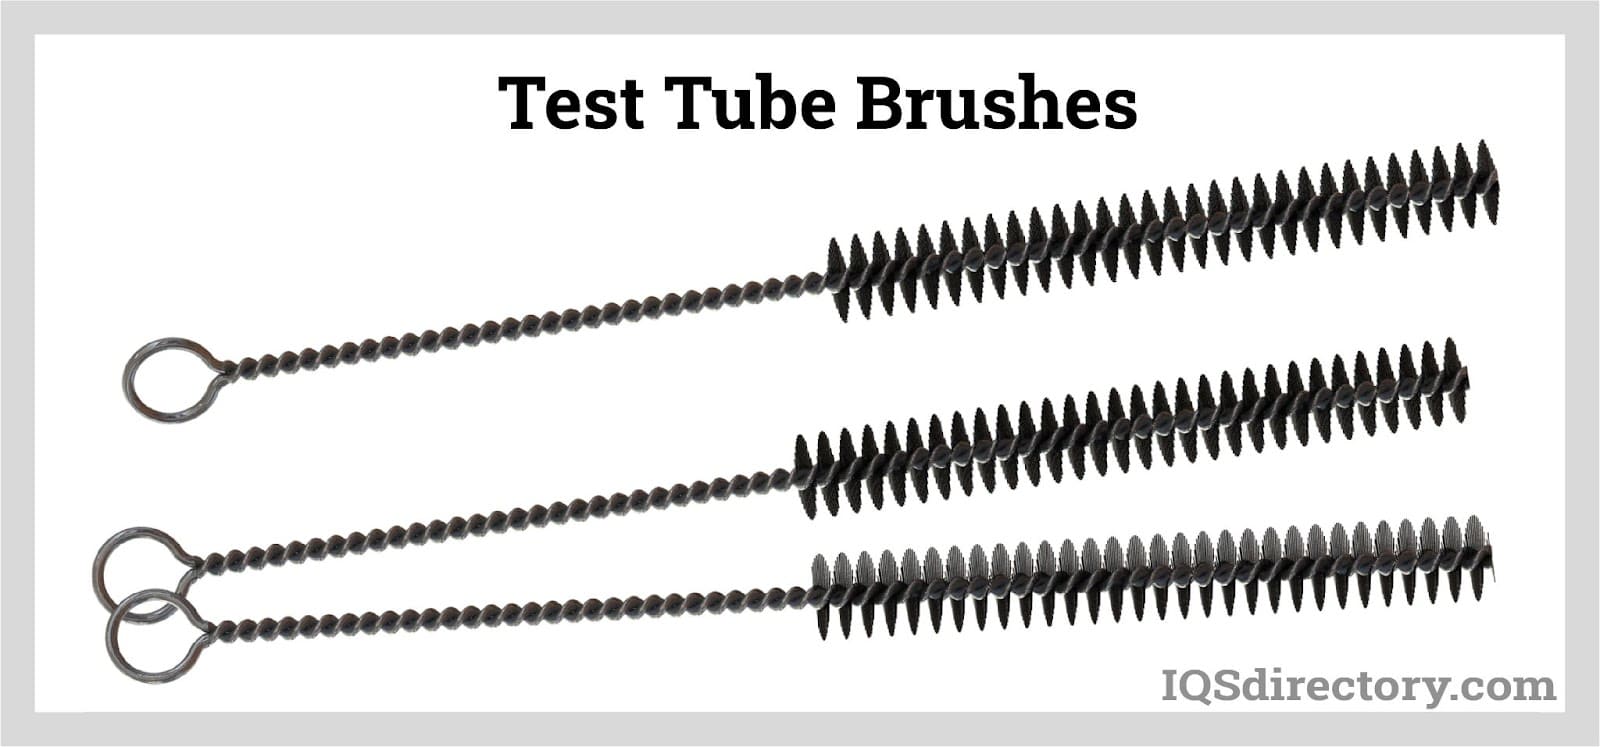 Test Tube Brushes